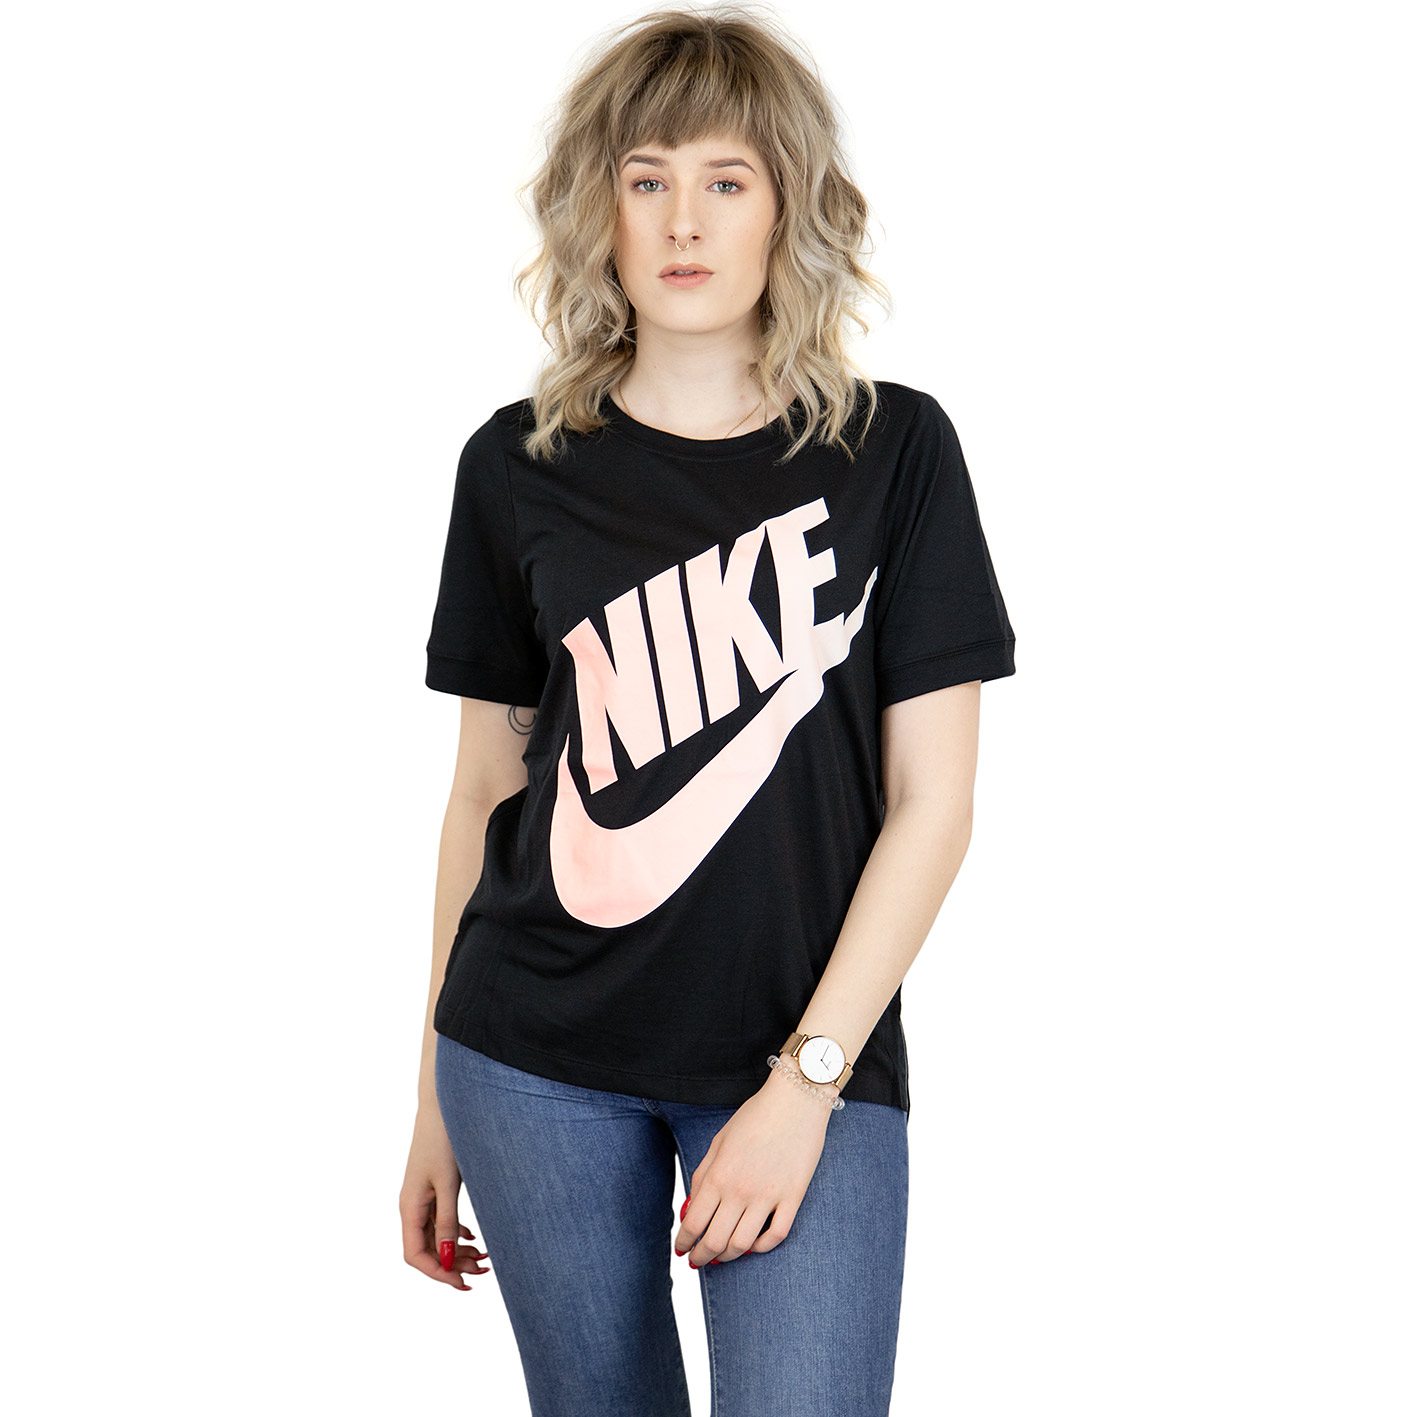 ☆ Nike Damen T-Shirt Futura schwarz/rosa - hier bestellen!